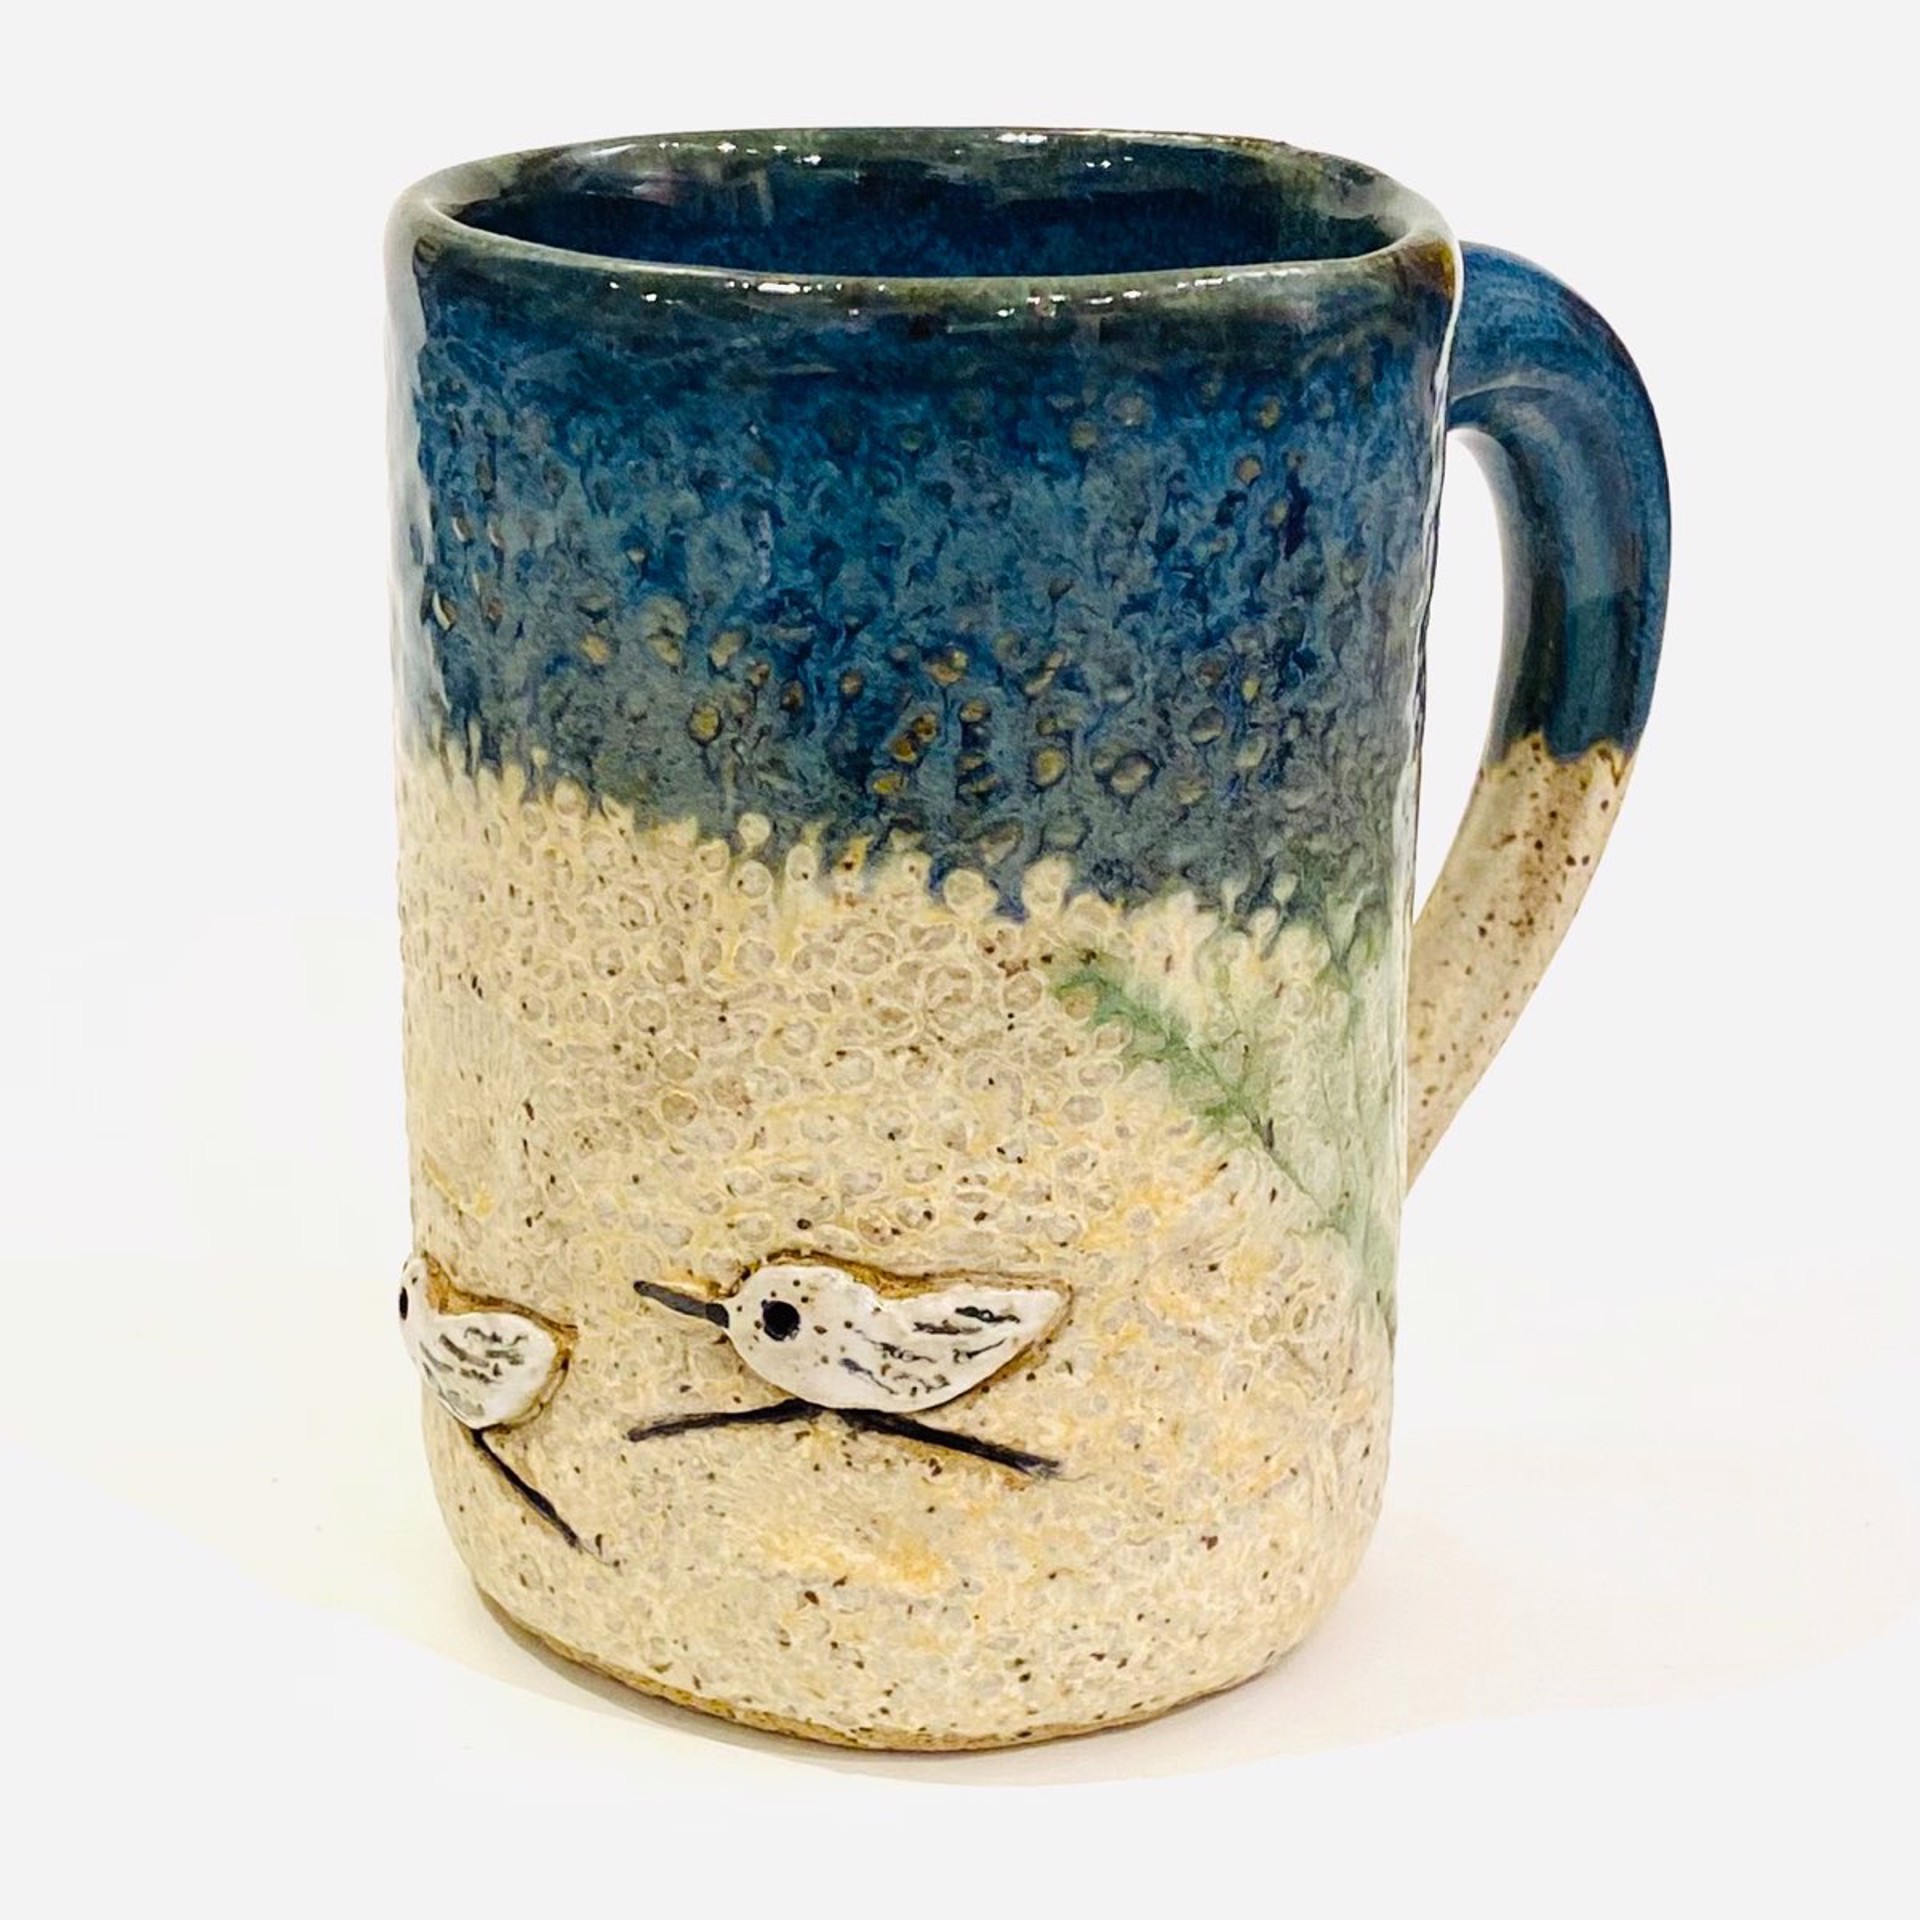 LG22-935 Mug with Sandpiper (Blue Glaze) by Jim & Steffi Logan